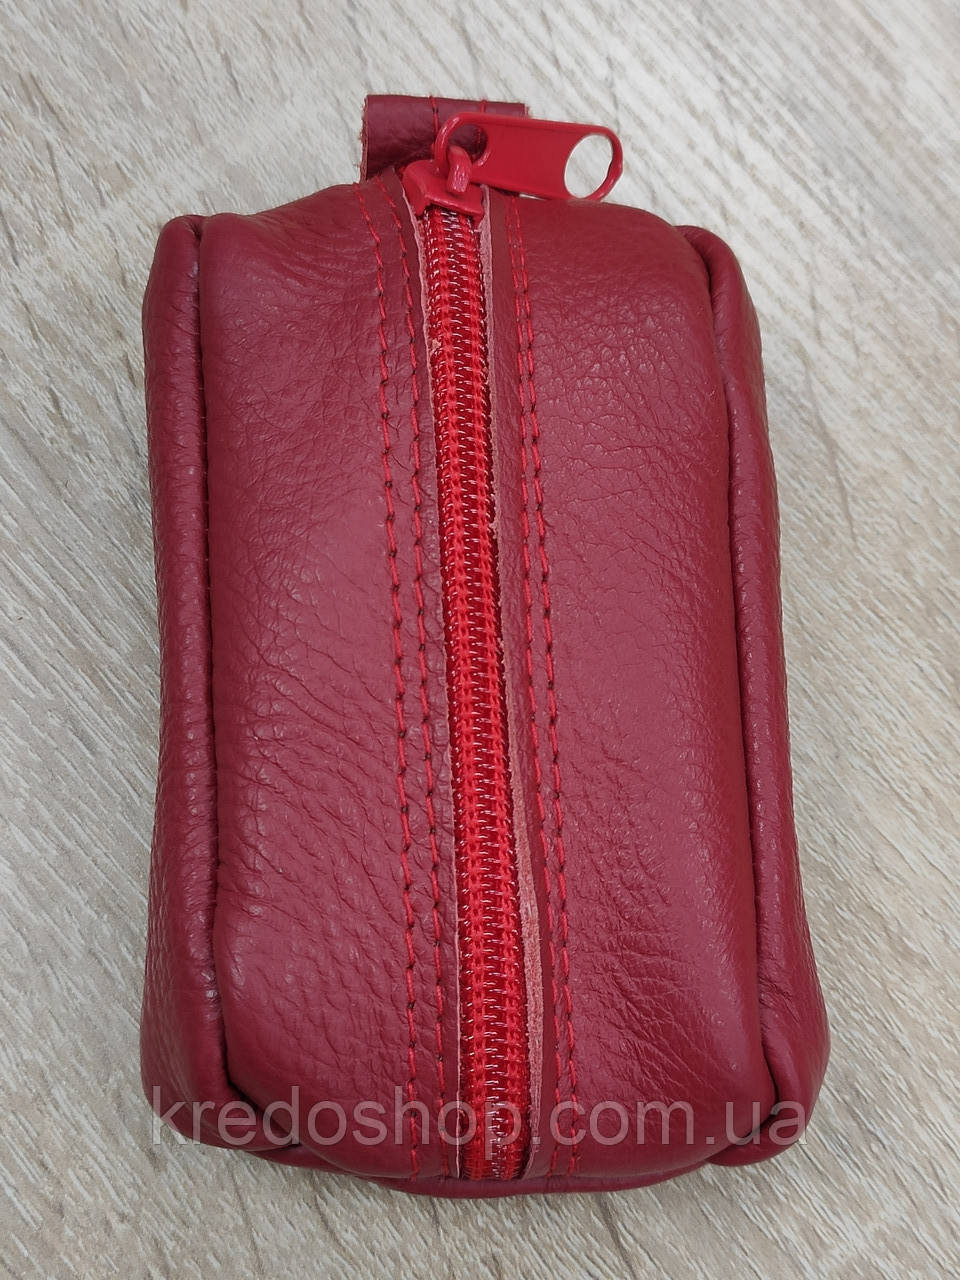 Ключница кожаная красная для ключей,компактная (Украина)